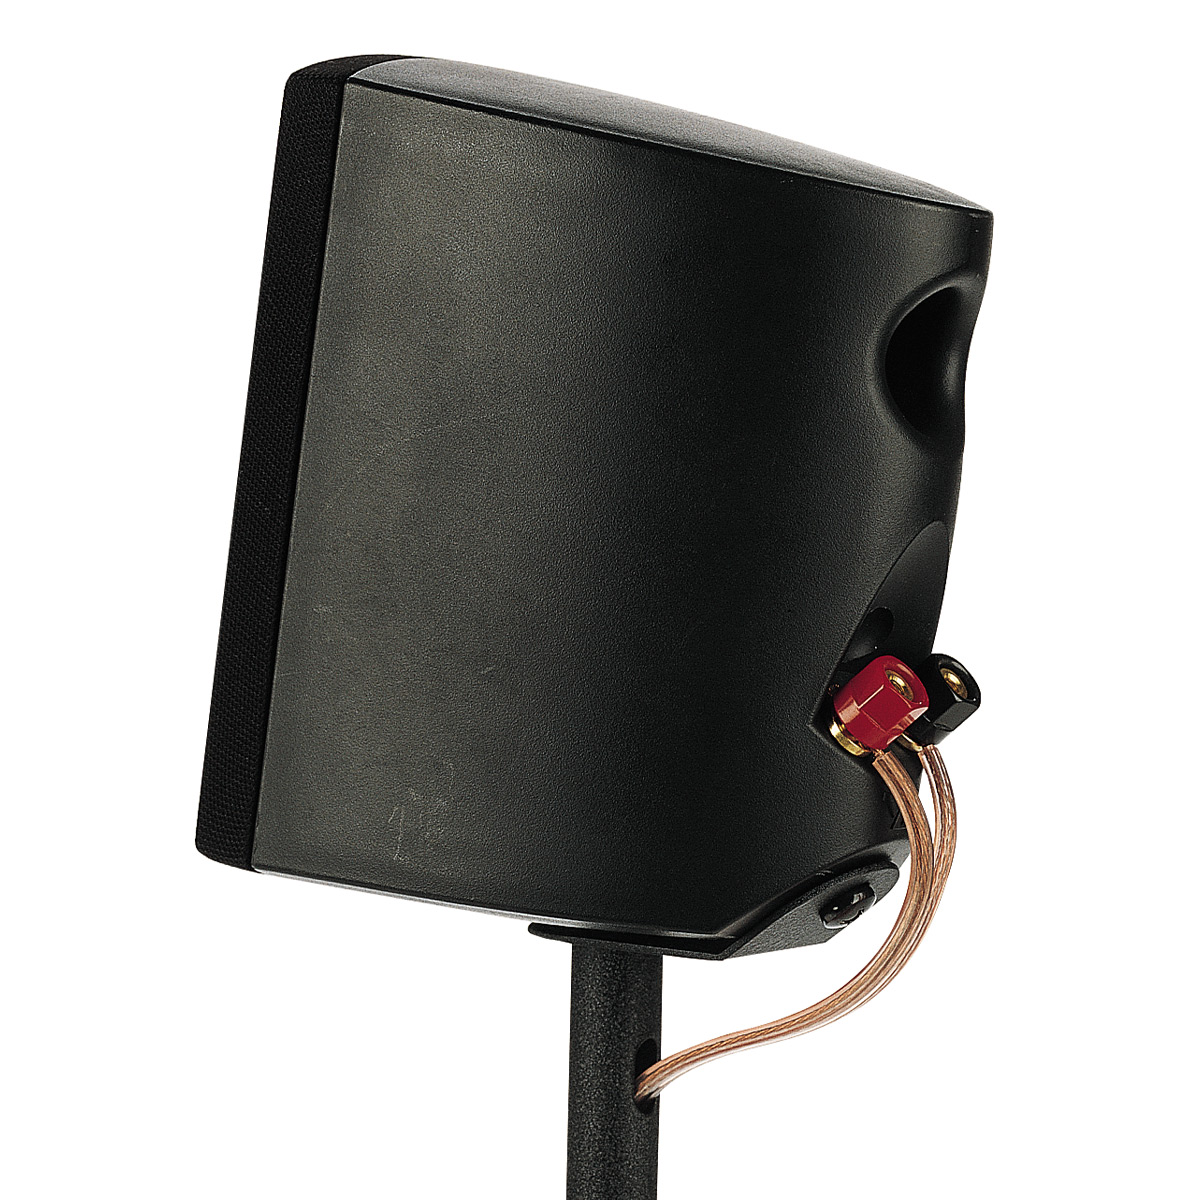 Sanus Euro Series Adjustable Speaker Stand for Satellite Speakers, Height Adjustable 26-42", Sold as Pair, Black - image 5 of 8